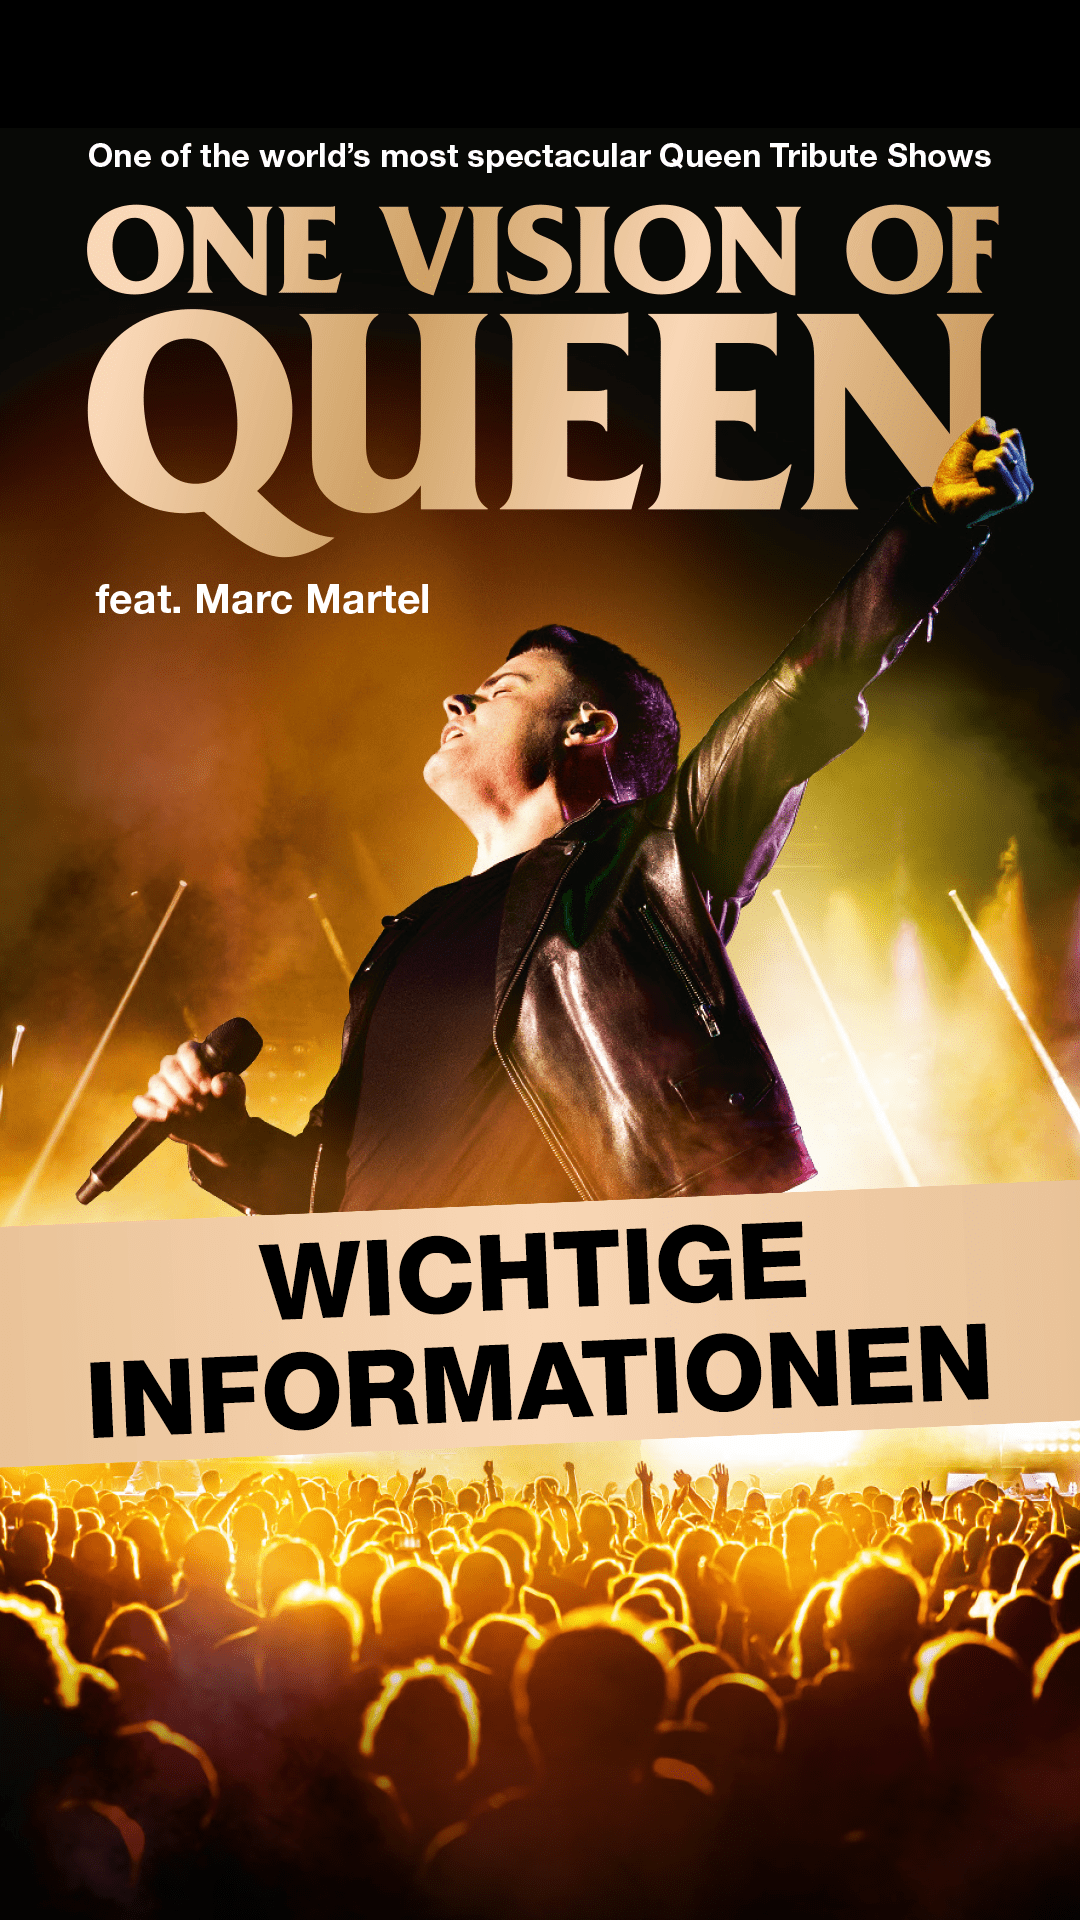 Queen Tribute Show – One Vision of Queen feat. Marc Martel: der Termin am 29.01.2022 ist ABGESAGT!